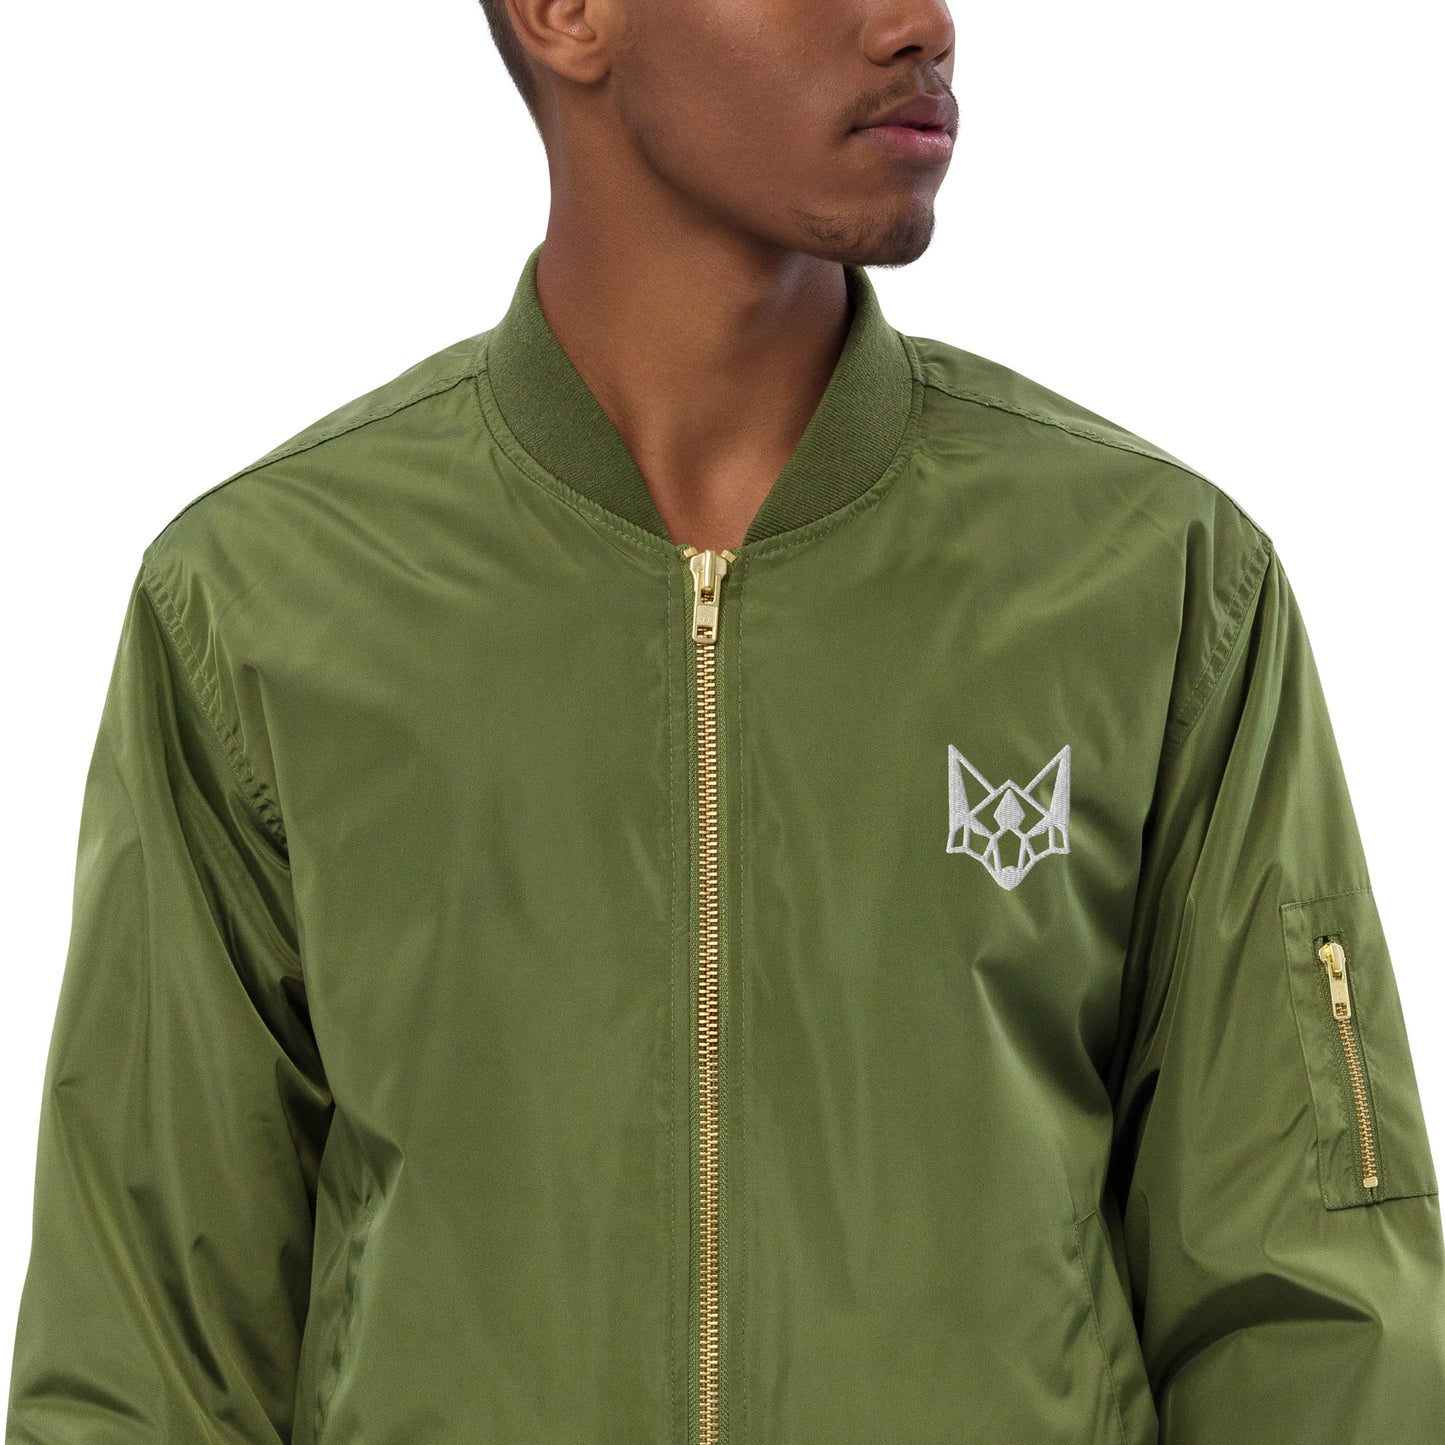 Hilltop Fox's Premium recycled bomber jacket